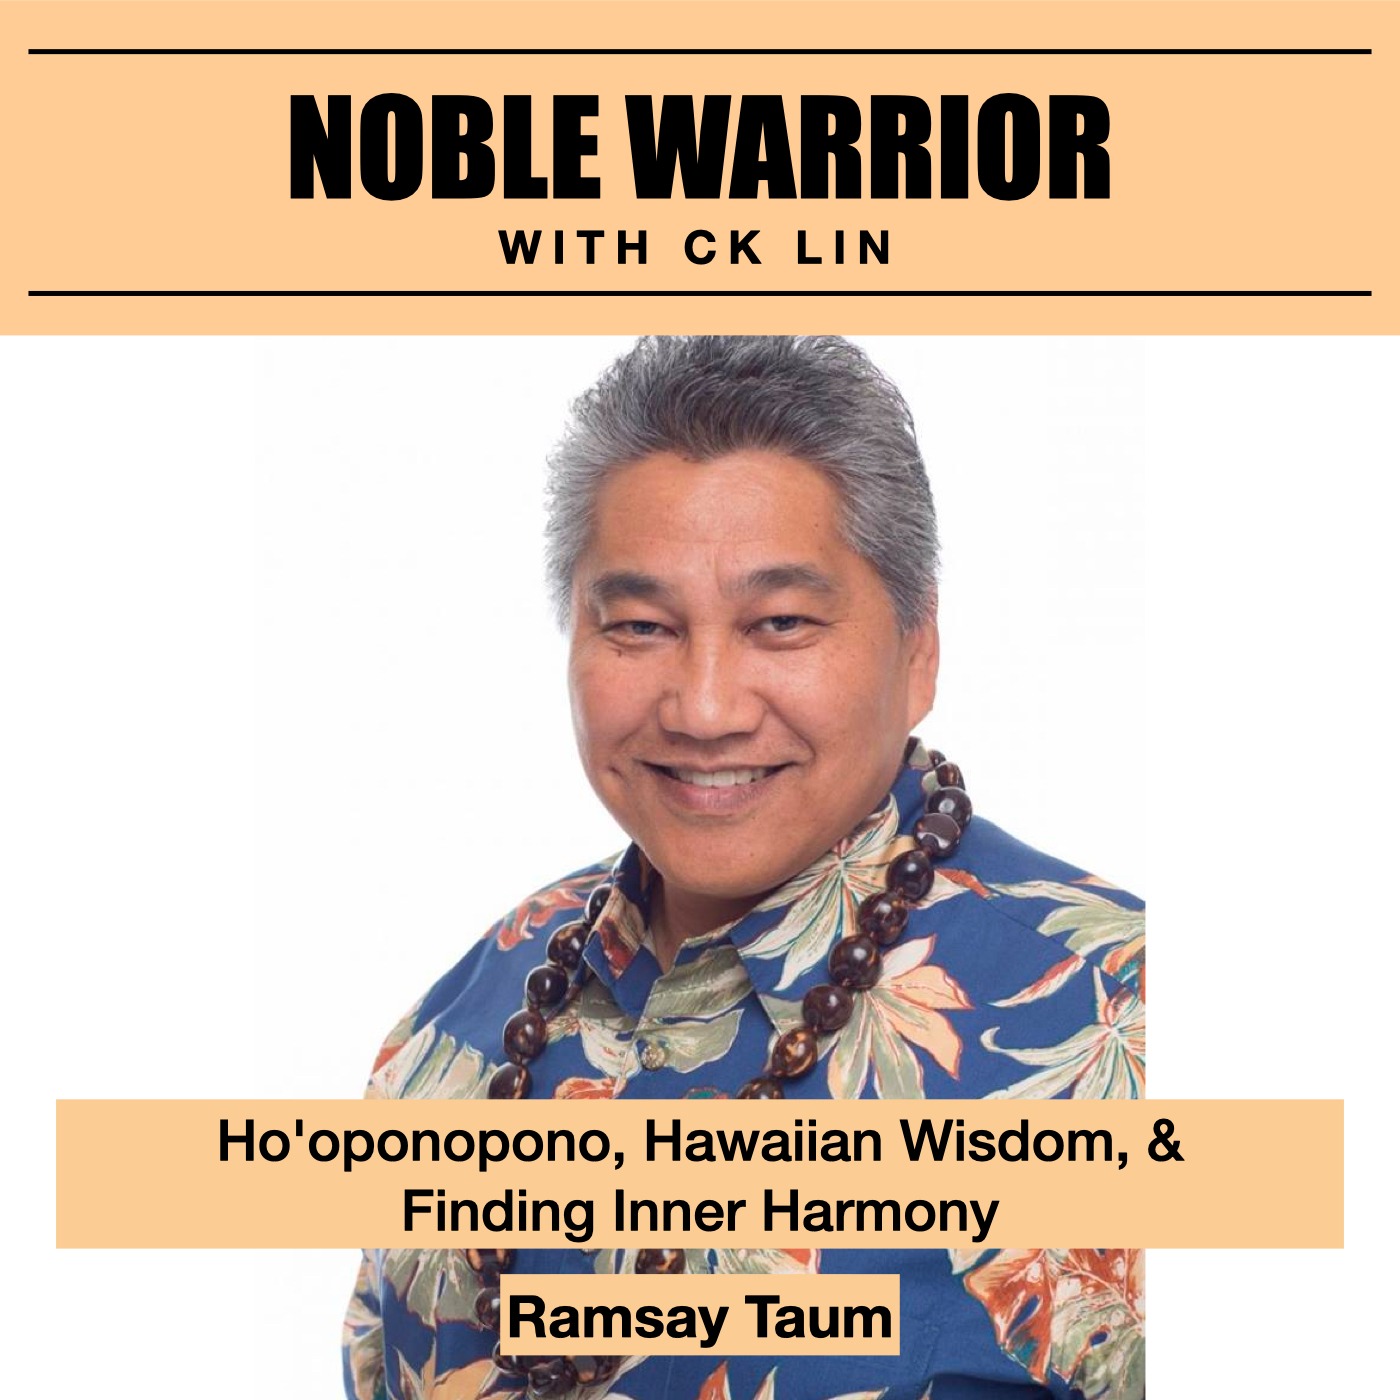 142 Ramsay Taum: Hoponopono, Hawaiian wisdom, and finding inner harmony Image